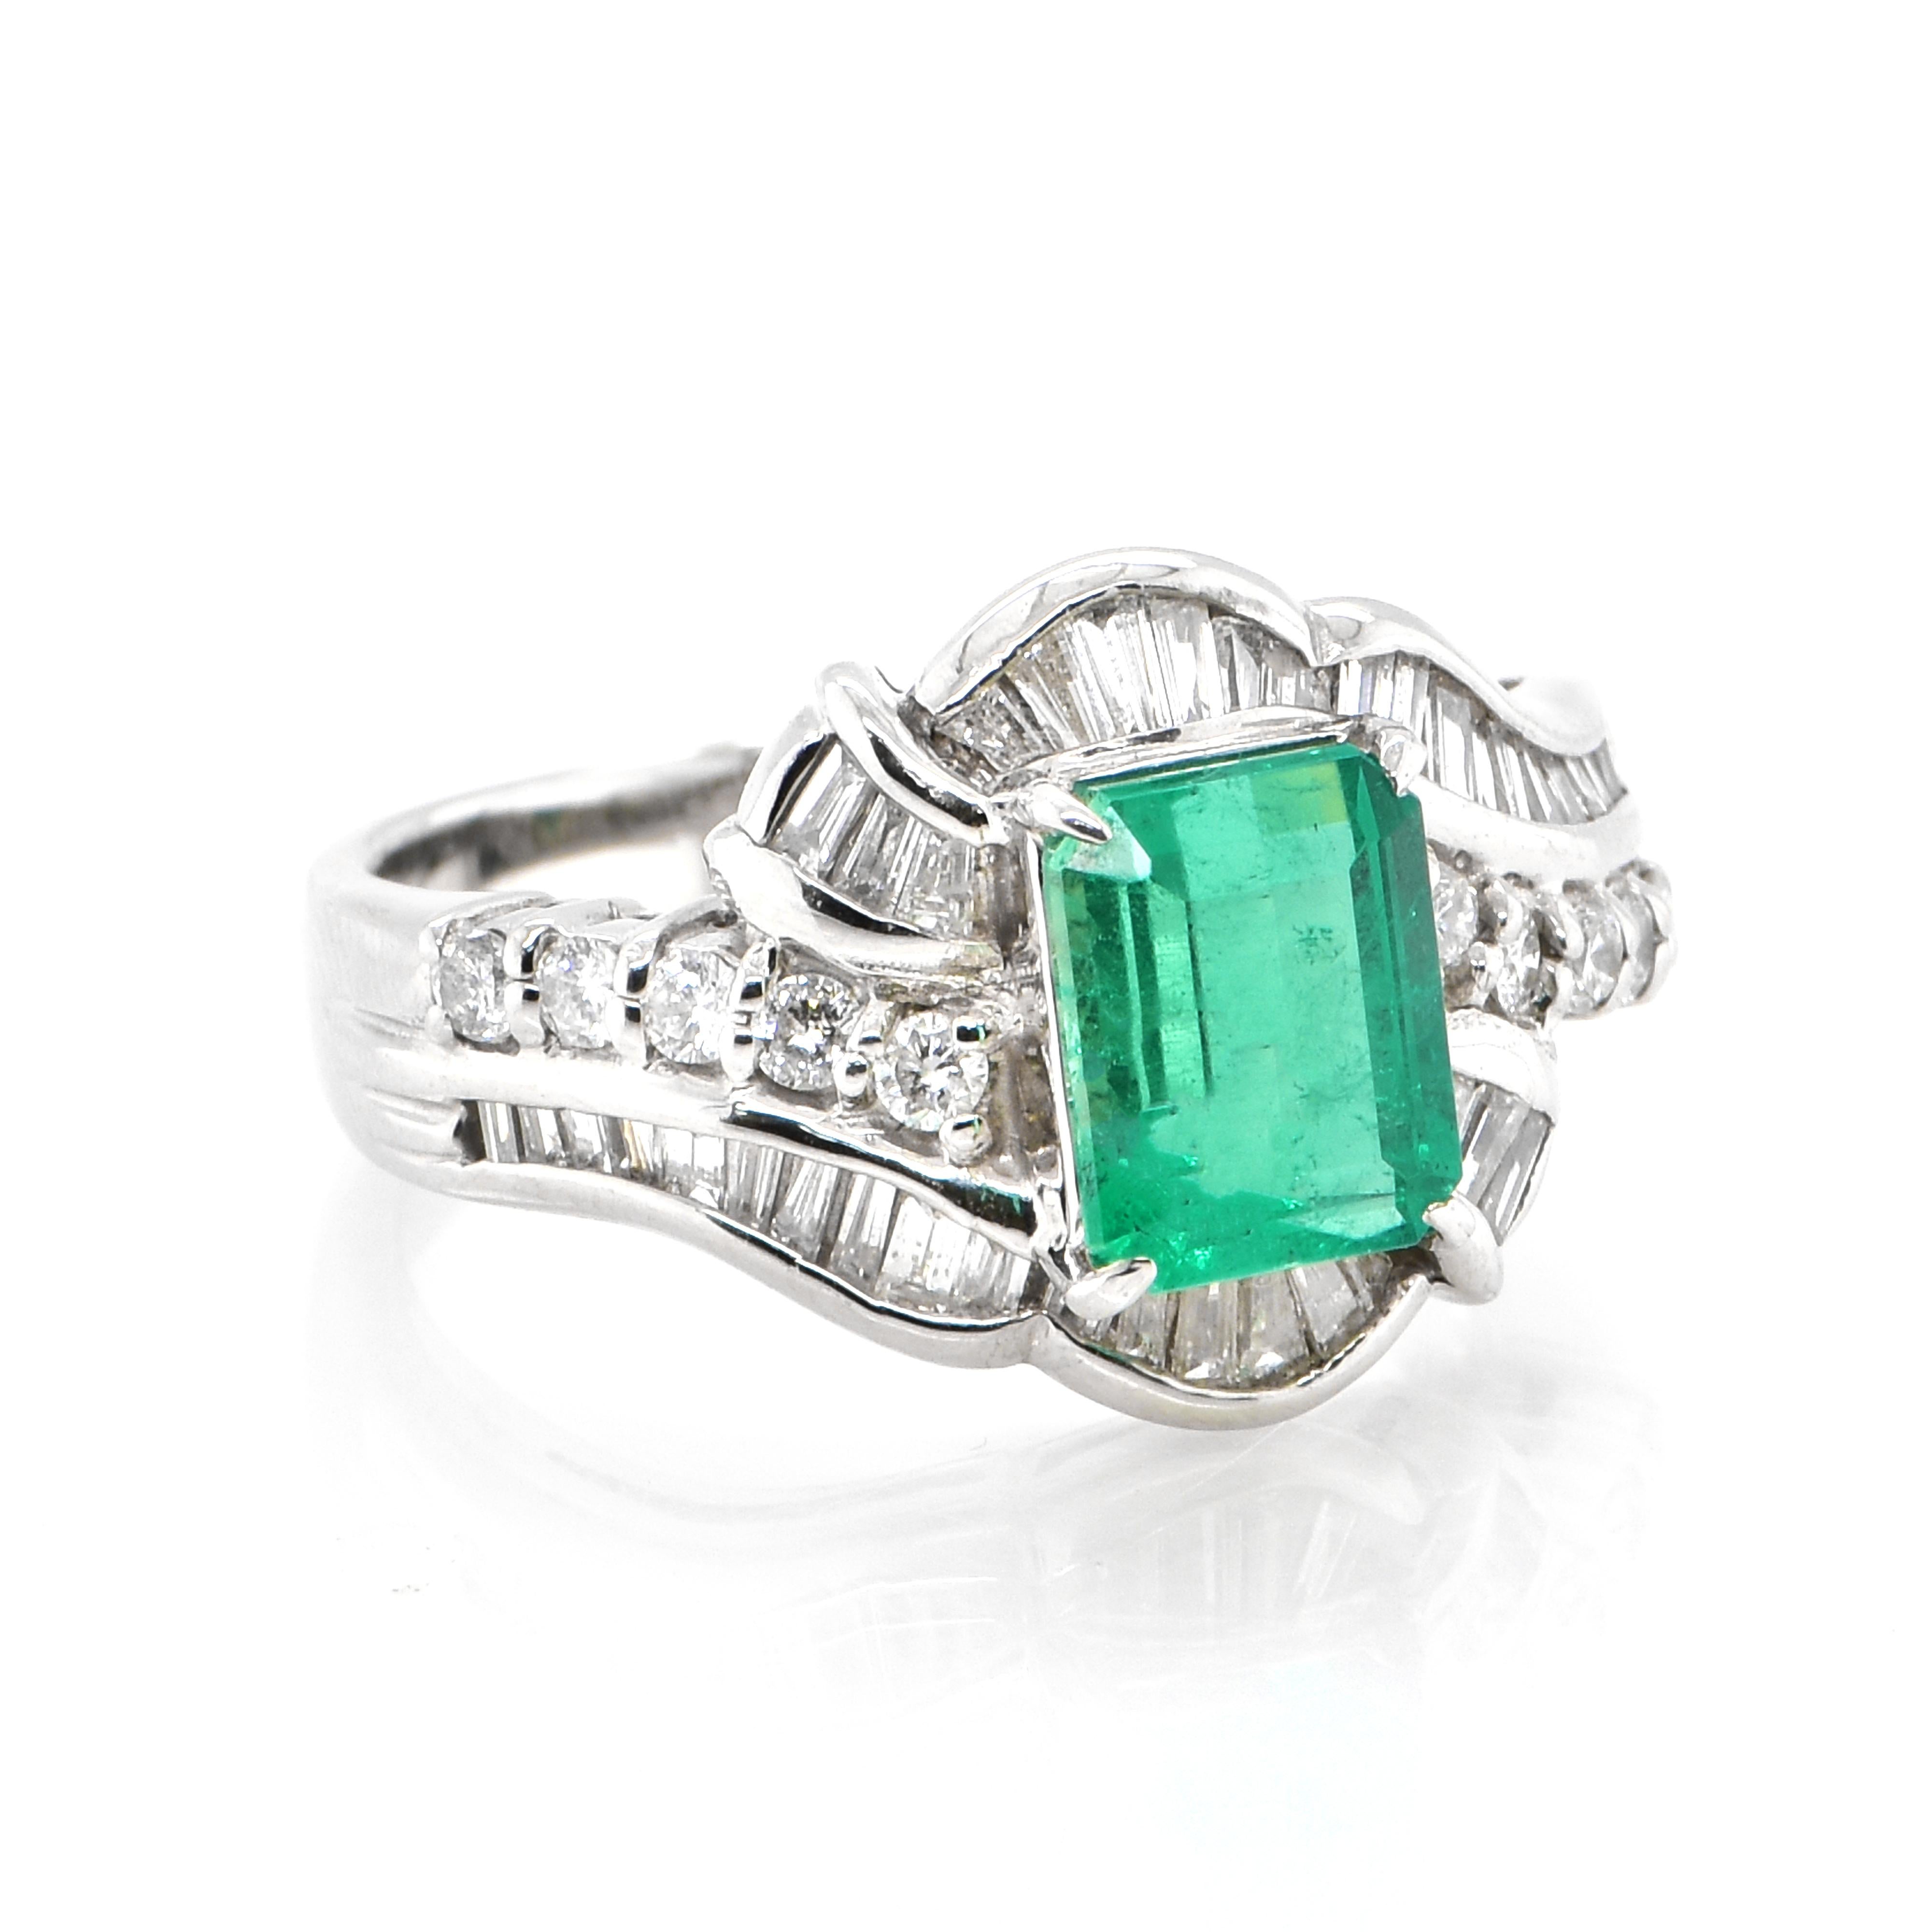 Modern 1.83 Carat Natural Emerald & Diamond Estate Cocktail Ring Made in Platinum For Sale